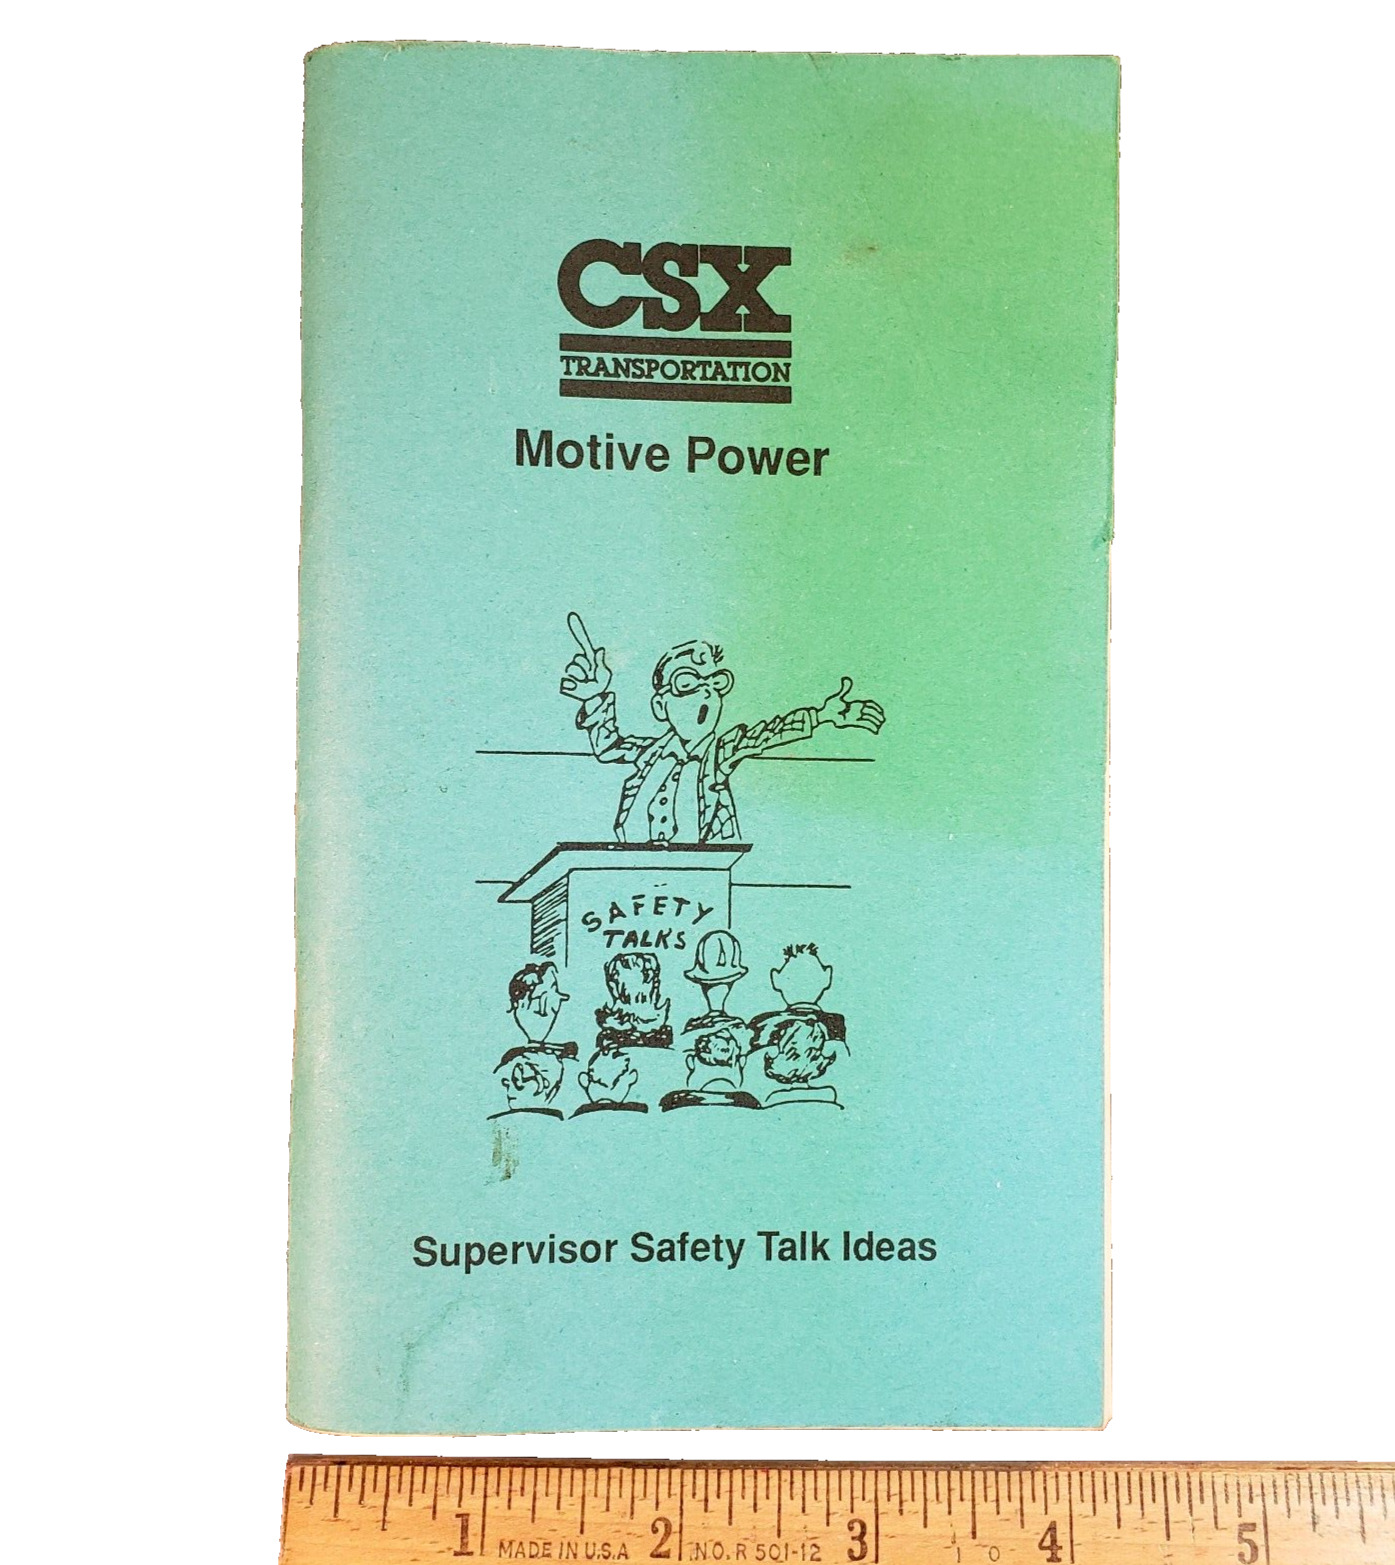 CSX Transportation MOTIVE POWER - Supervisor Safety Talk Ideas Green Hand Book